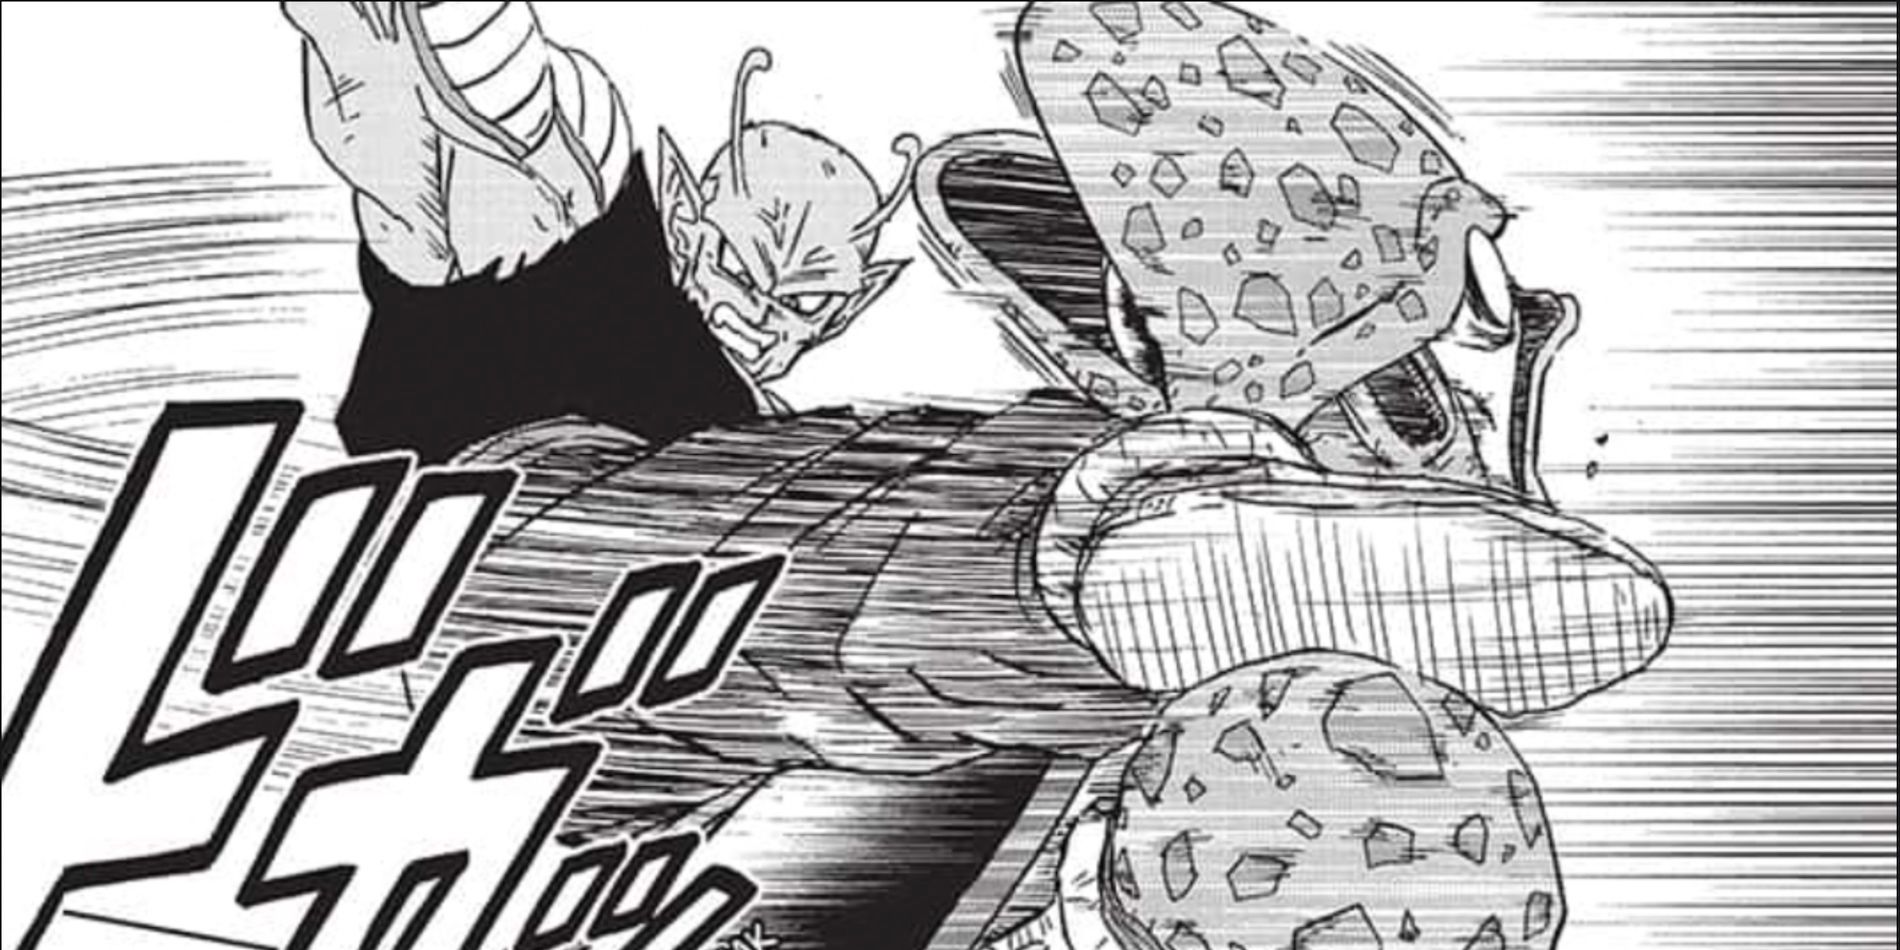 Orange Piccolo kicks Cell Max in the neck in Chapter 98 of Dragon Ball Super manga